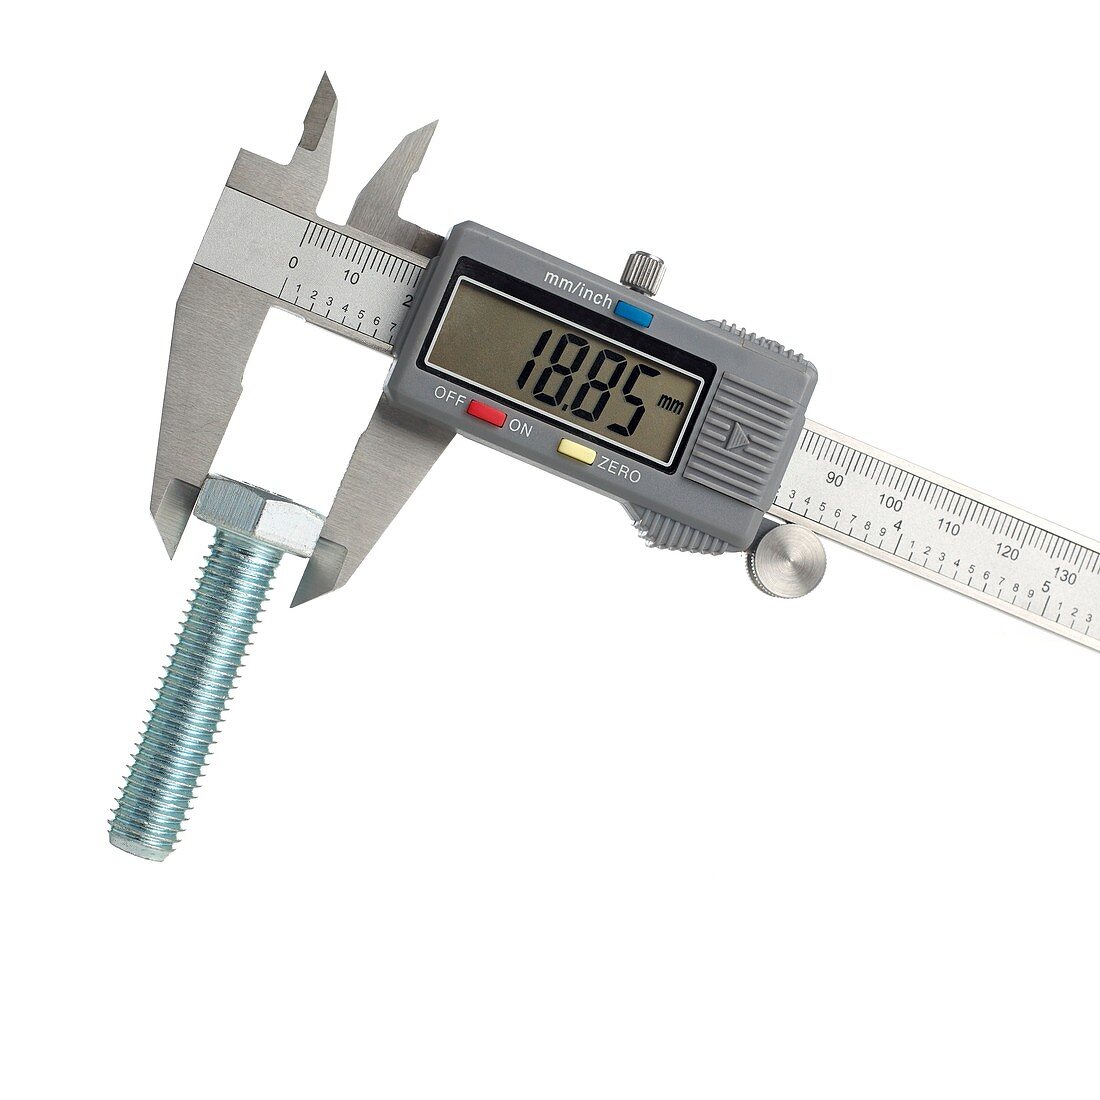 Digital caliper measuring a bolt